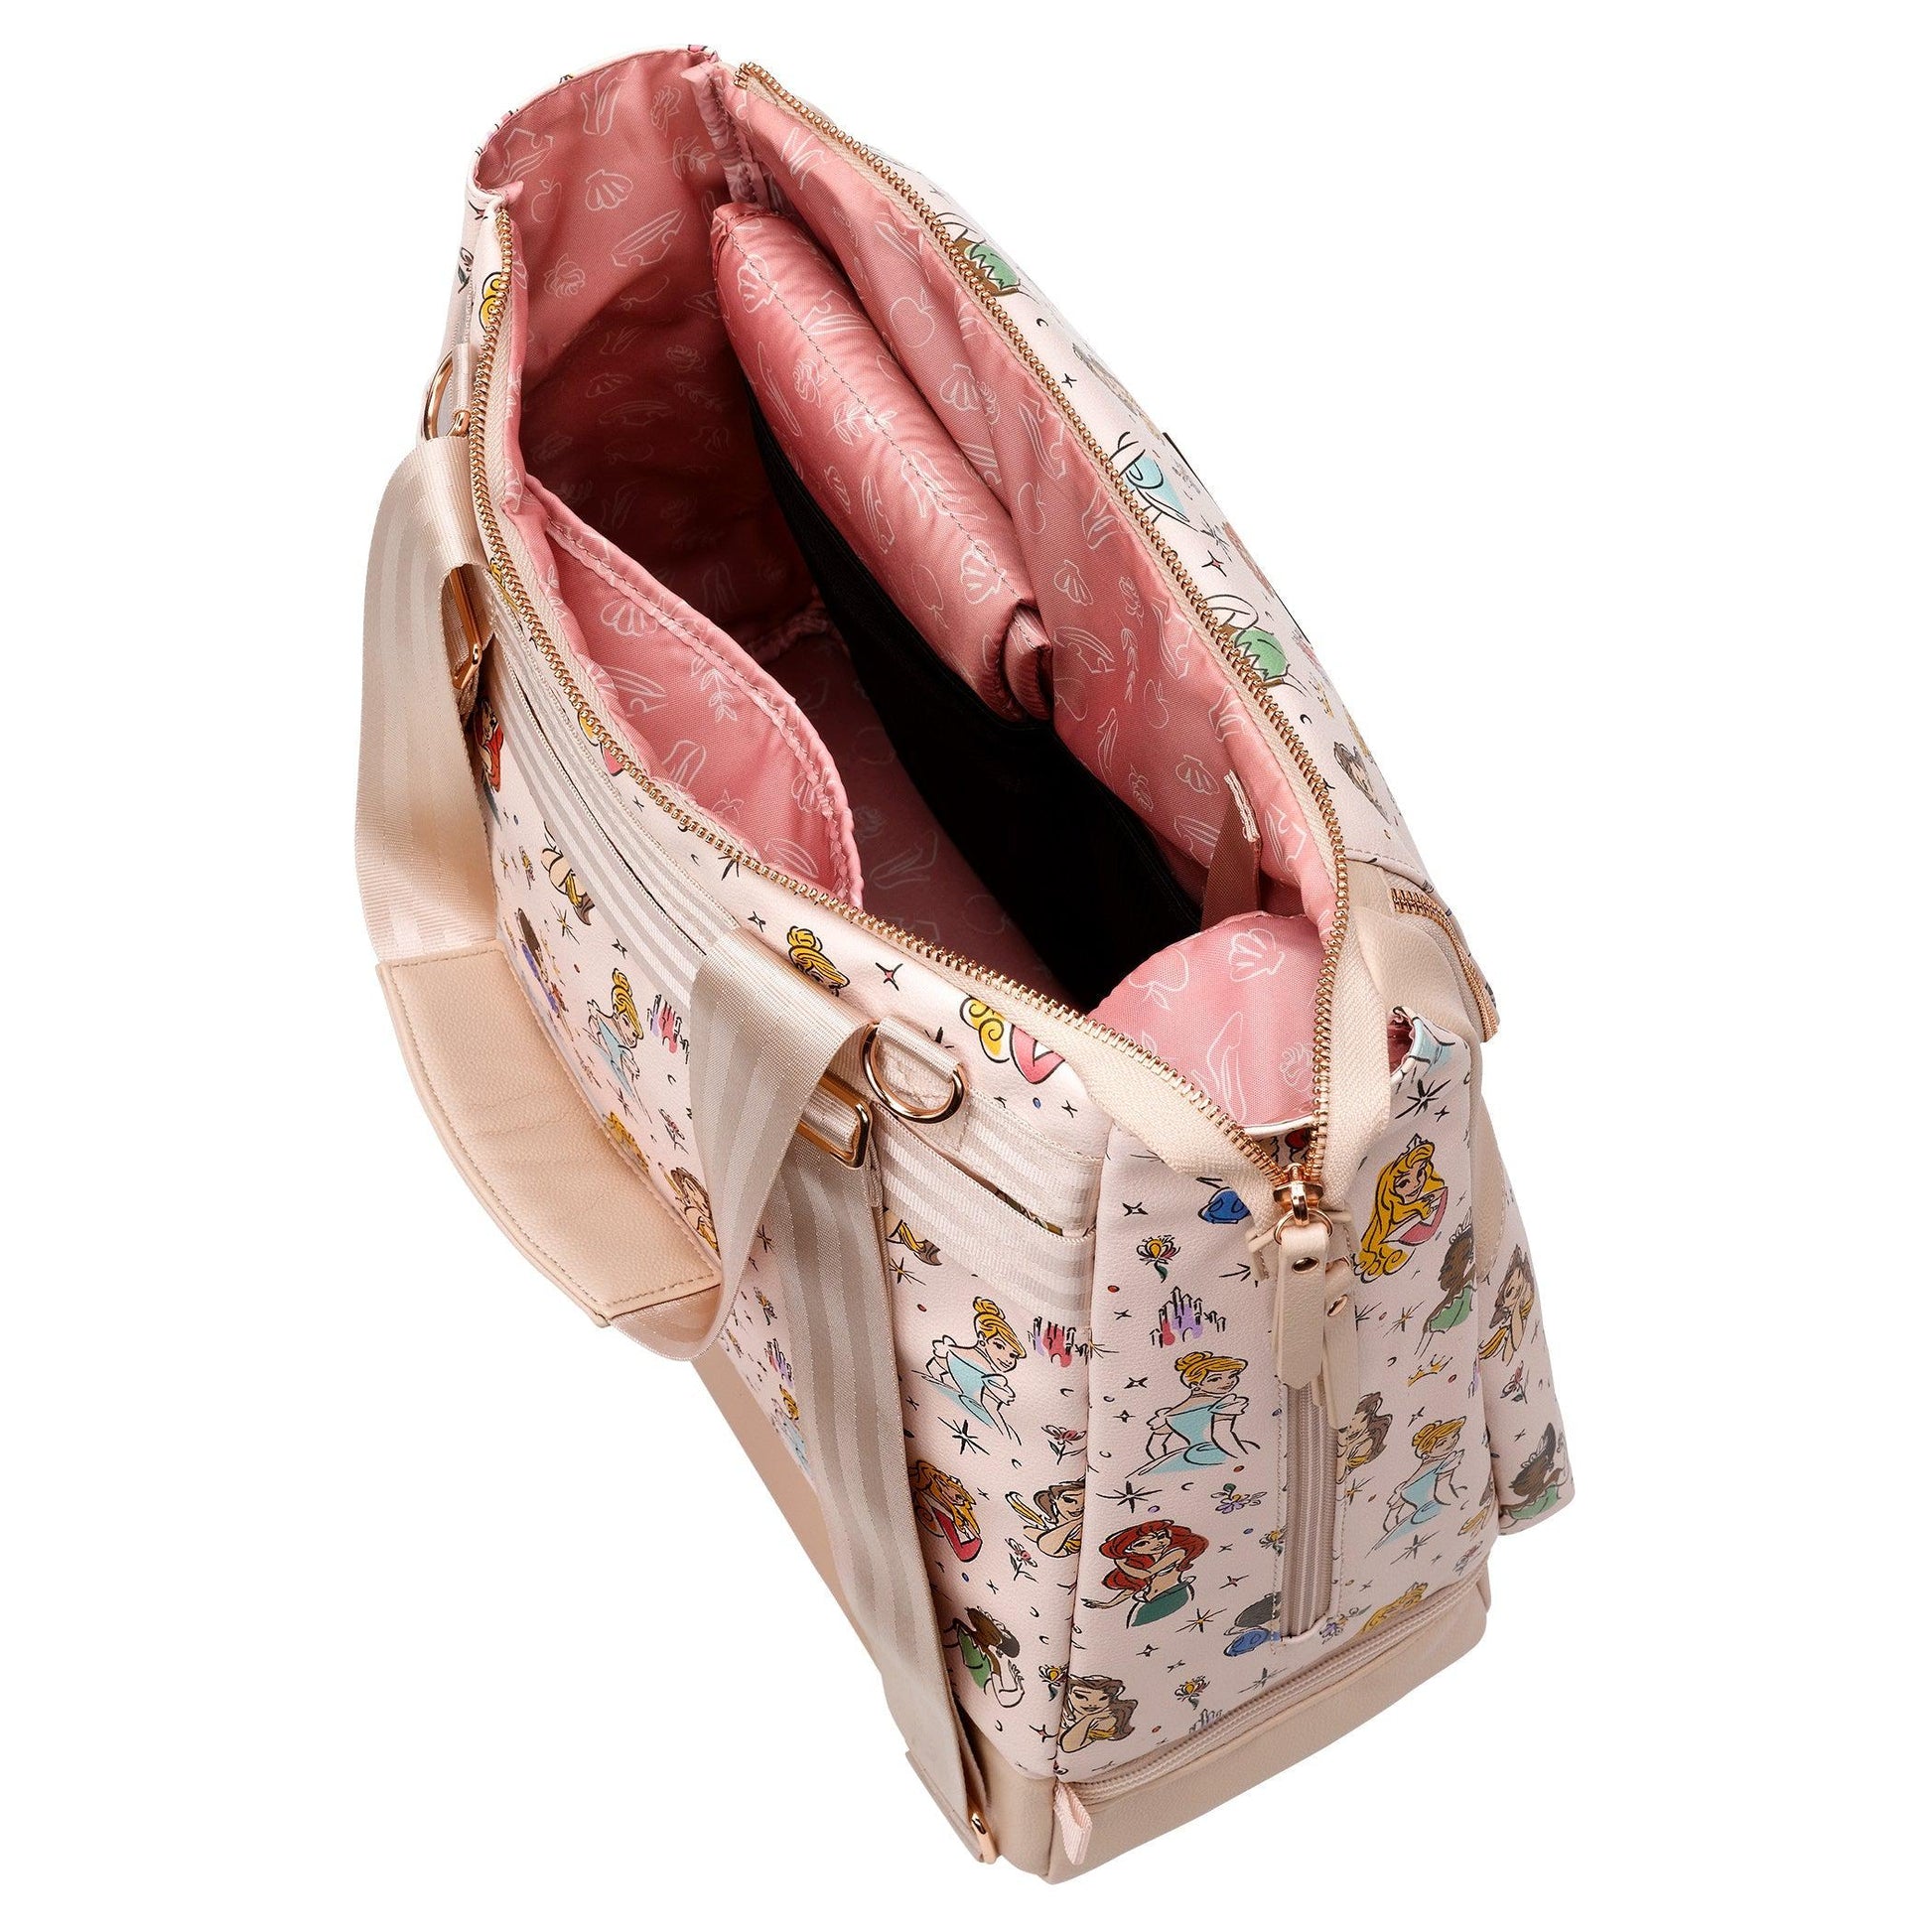 Petunia Pickle Bottom Convertible Tote Backpack Pivot Pack in Disney Princess Totes